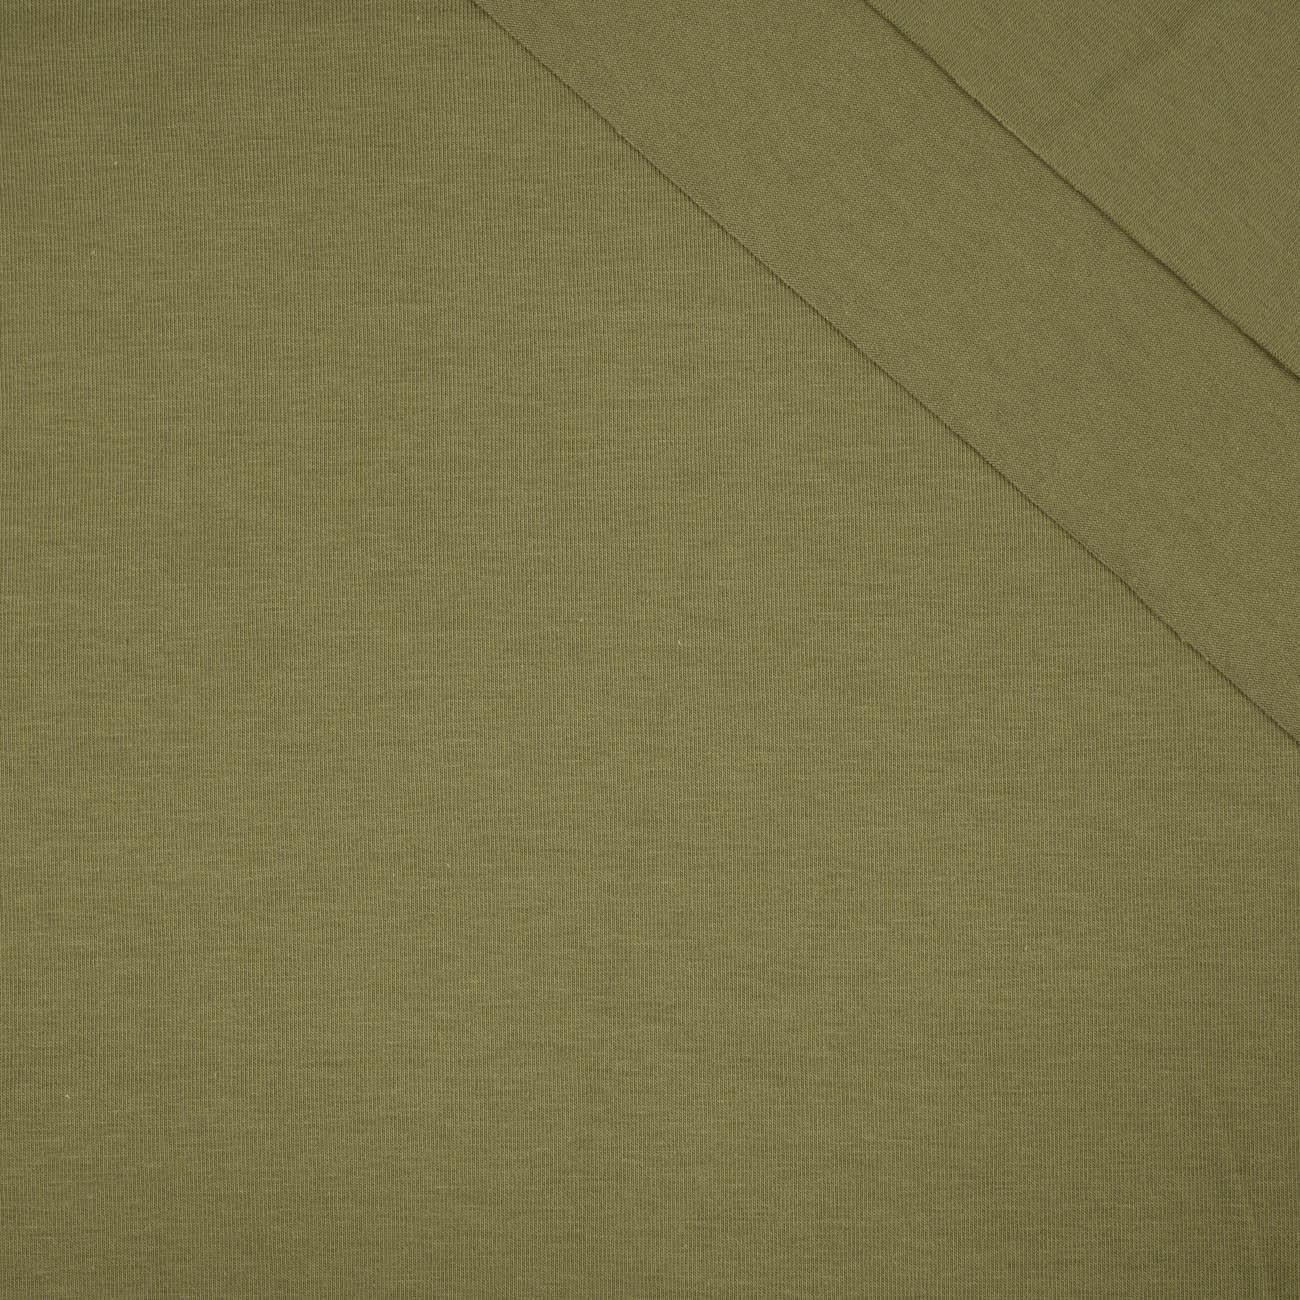 D-13 OLIWKOWY - dzianina t-shirt z elastanem TE210